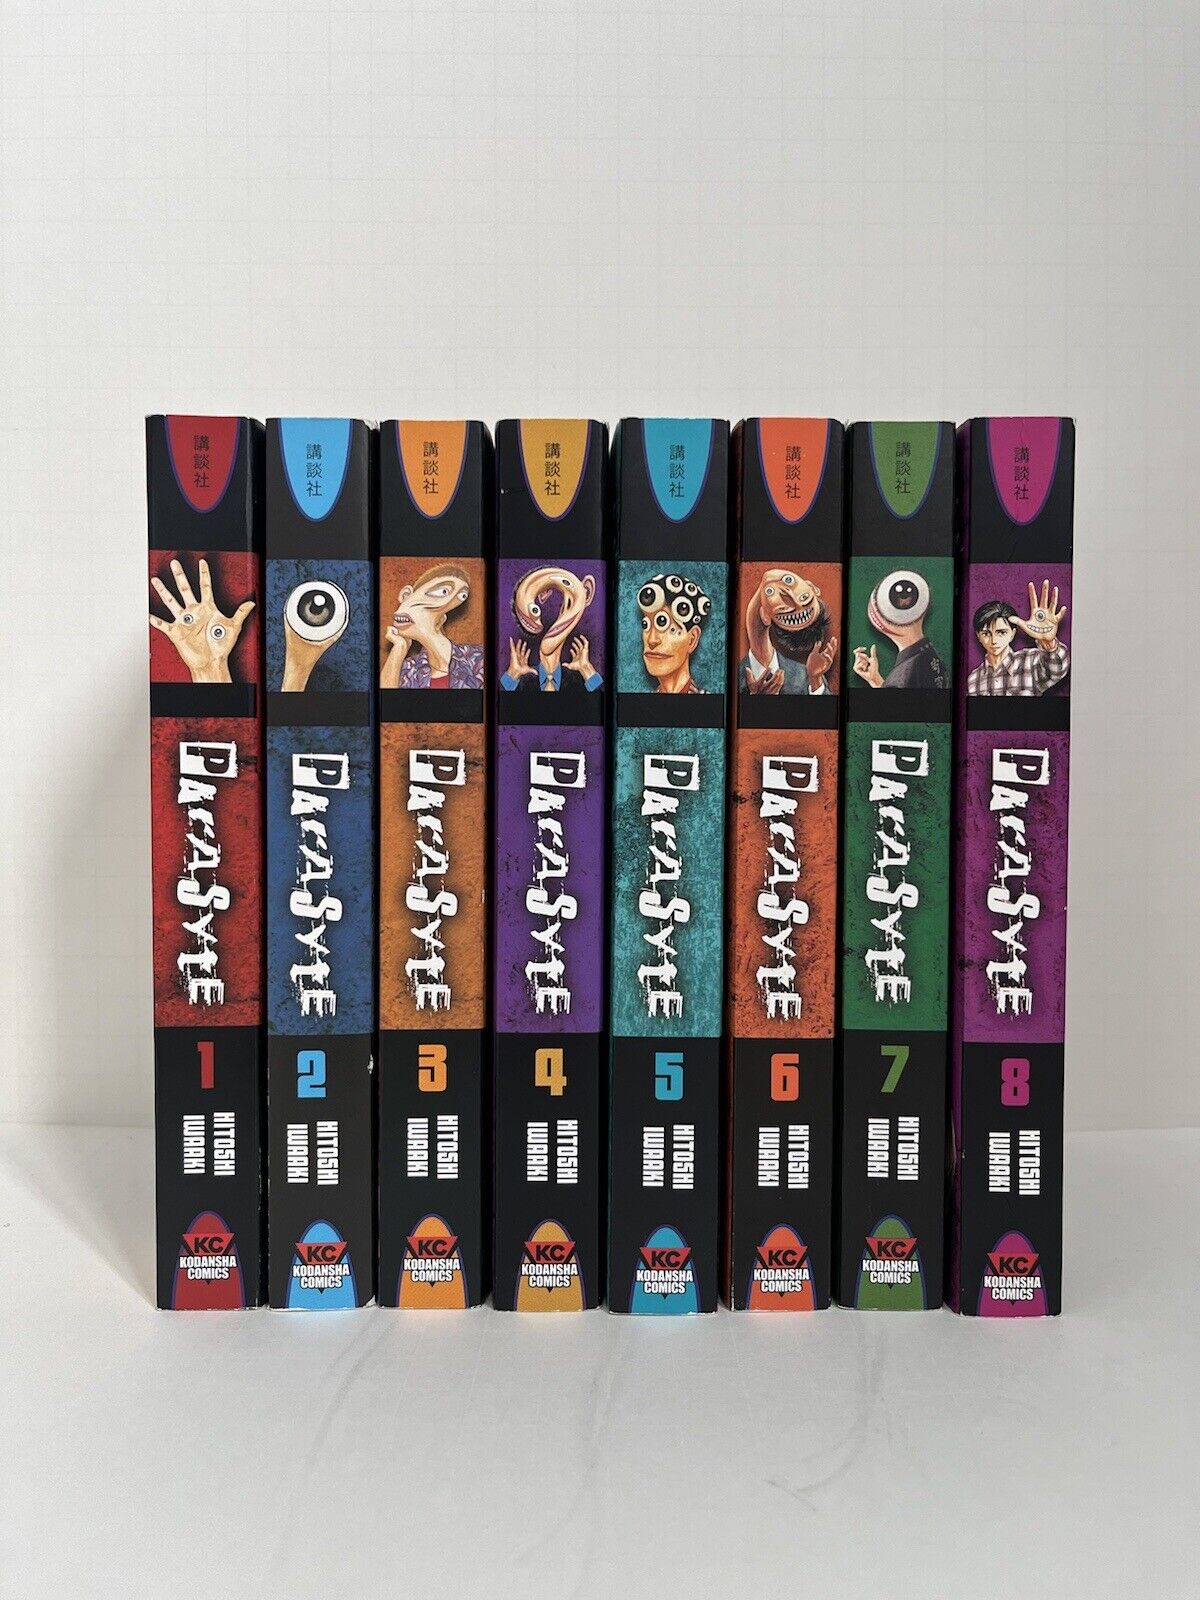 Parasyte Manga Volumes 1-8: Complete Series